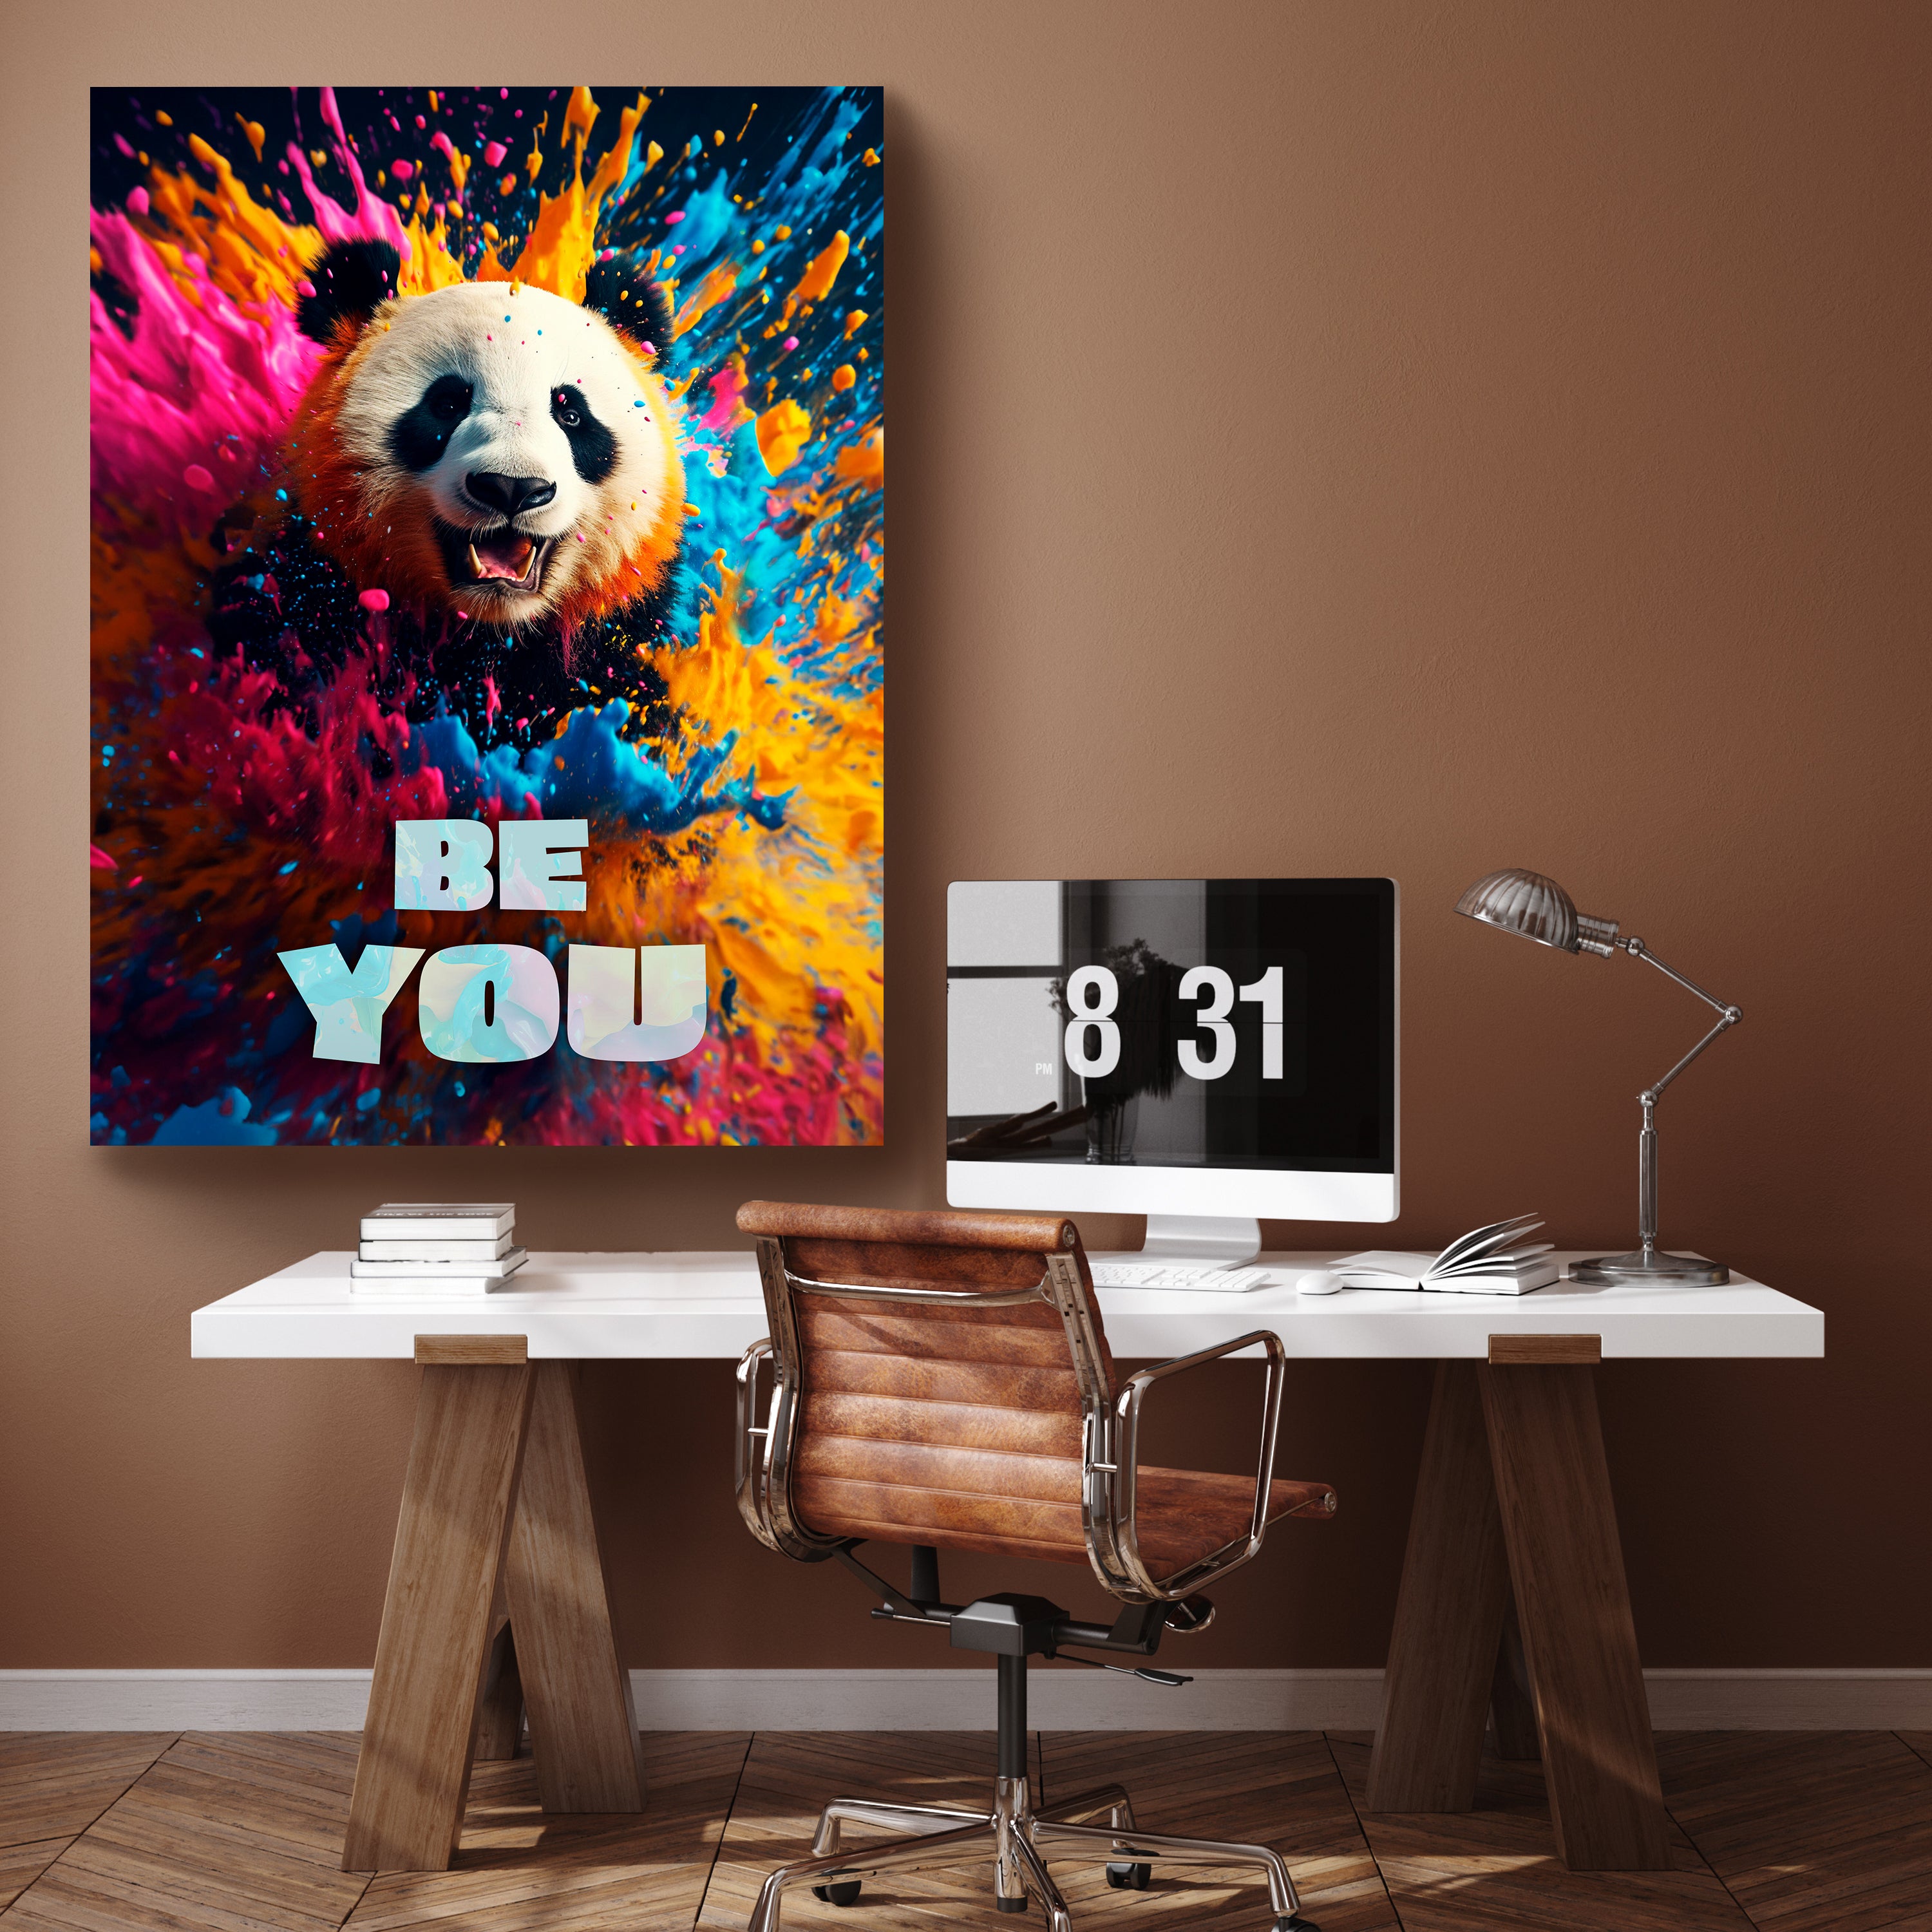 Leinwandbild Spruch Be You, Panda M0825 kaufen - Bild 2